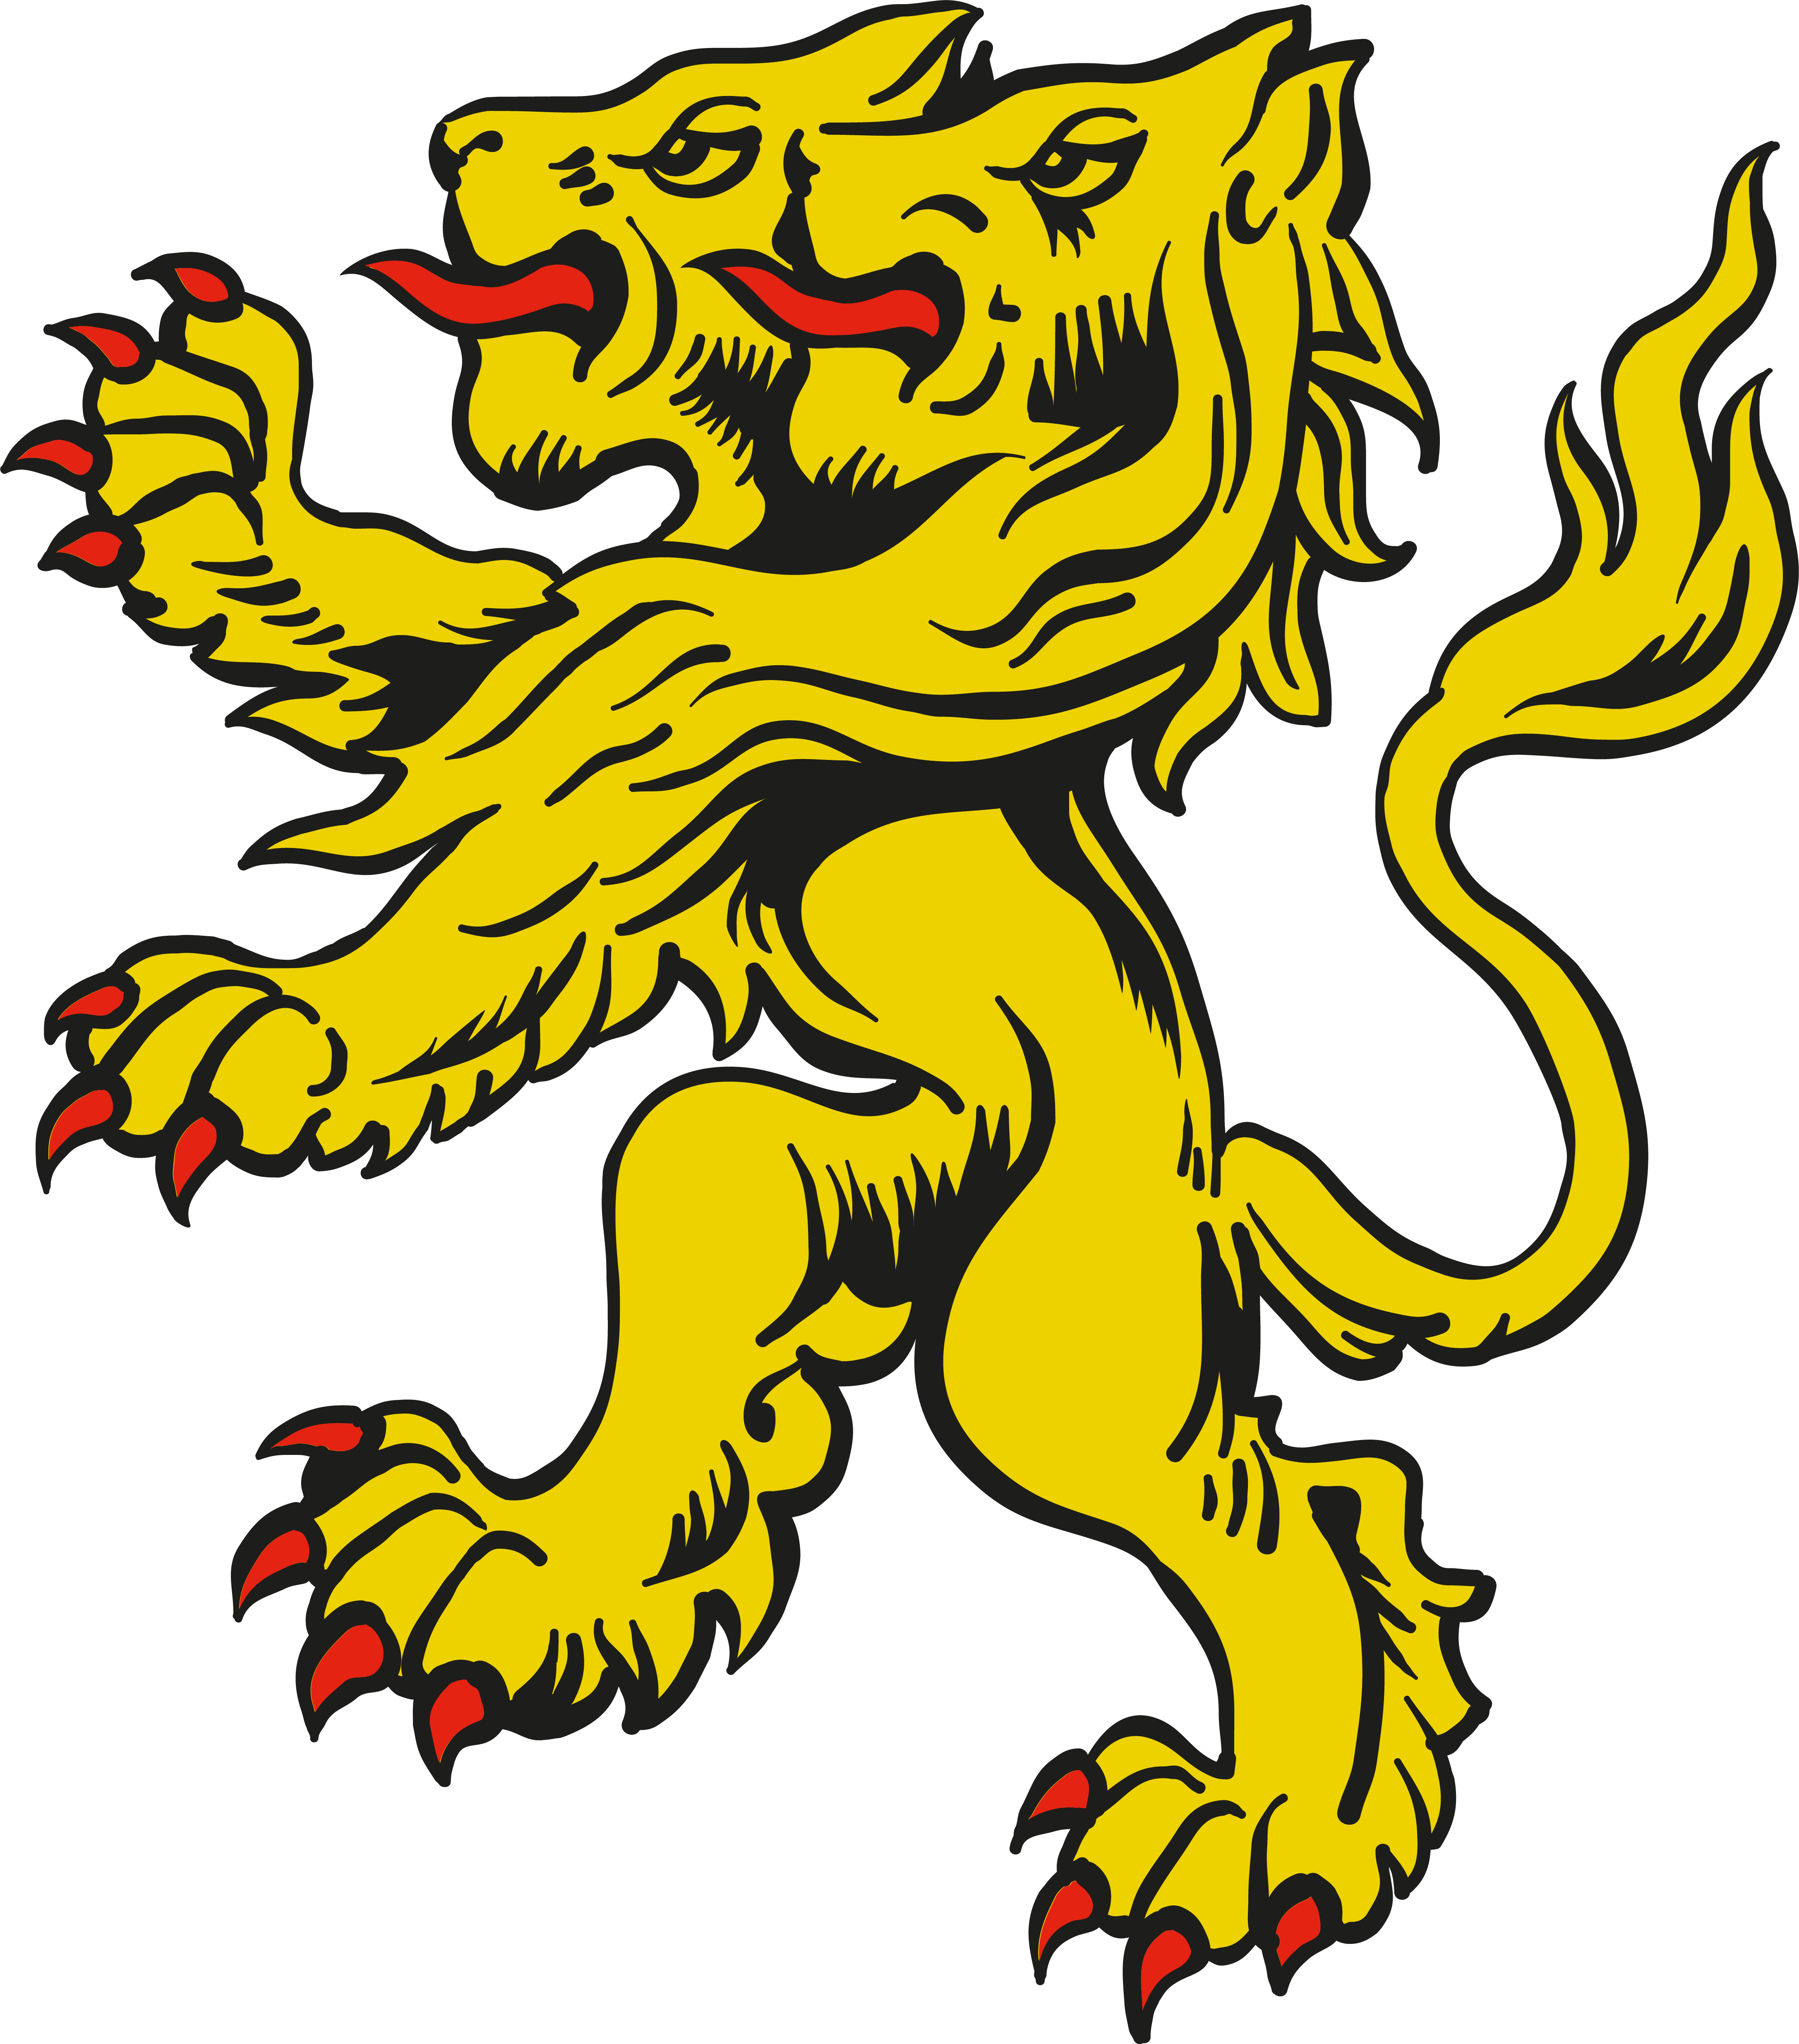 University of Birmingham lion logo